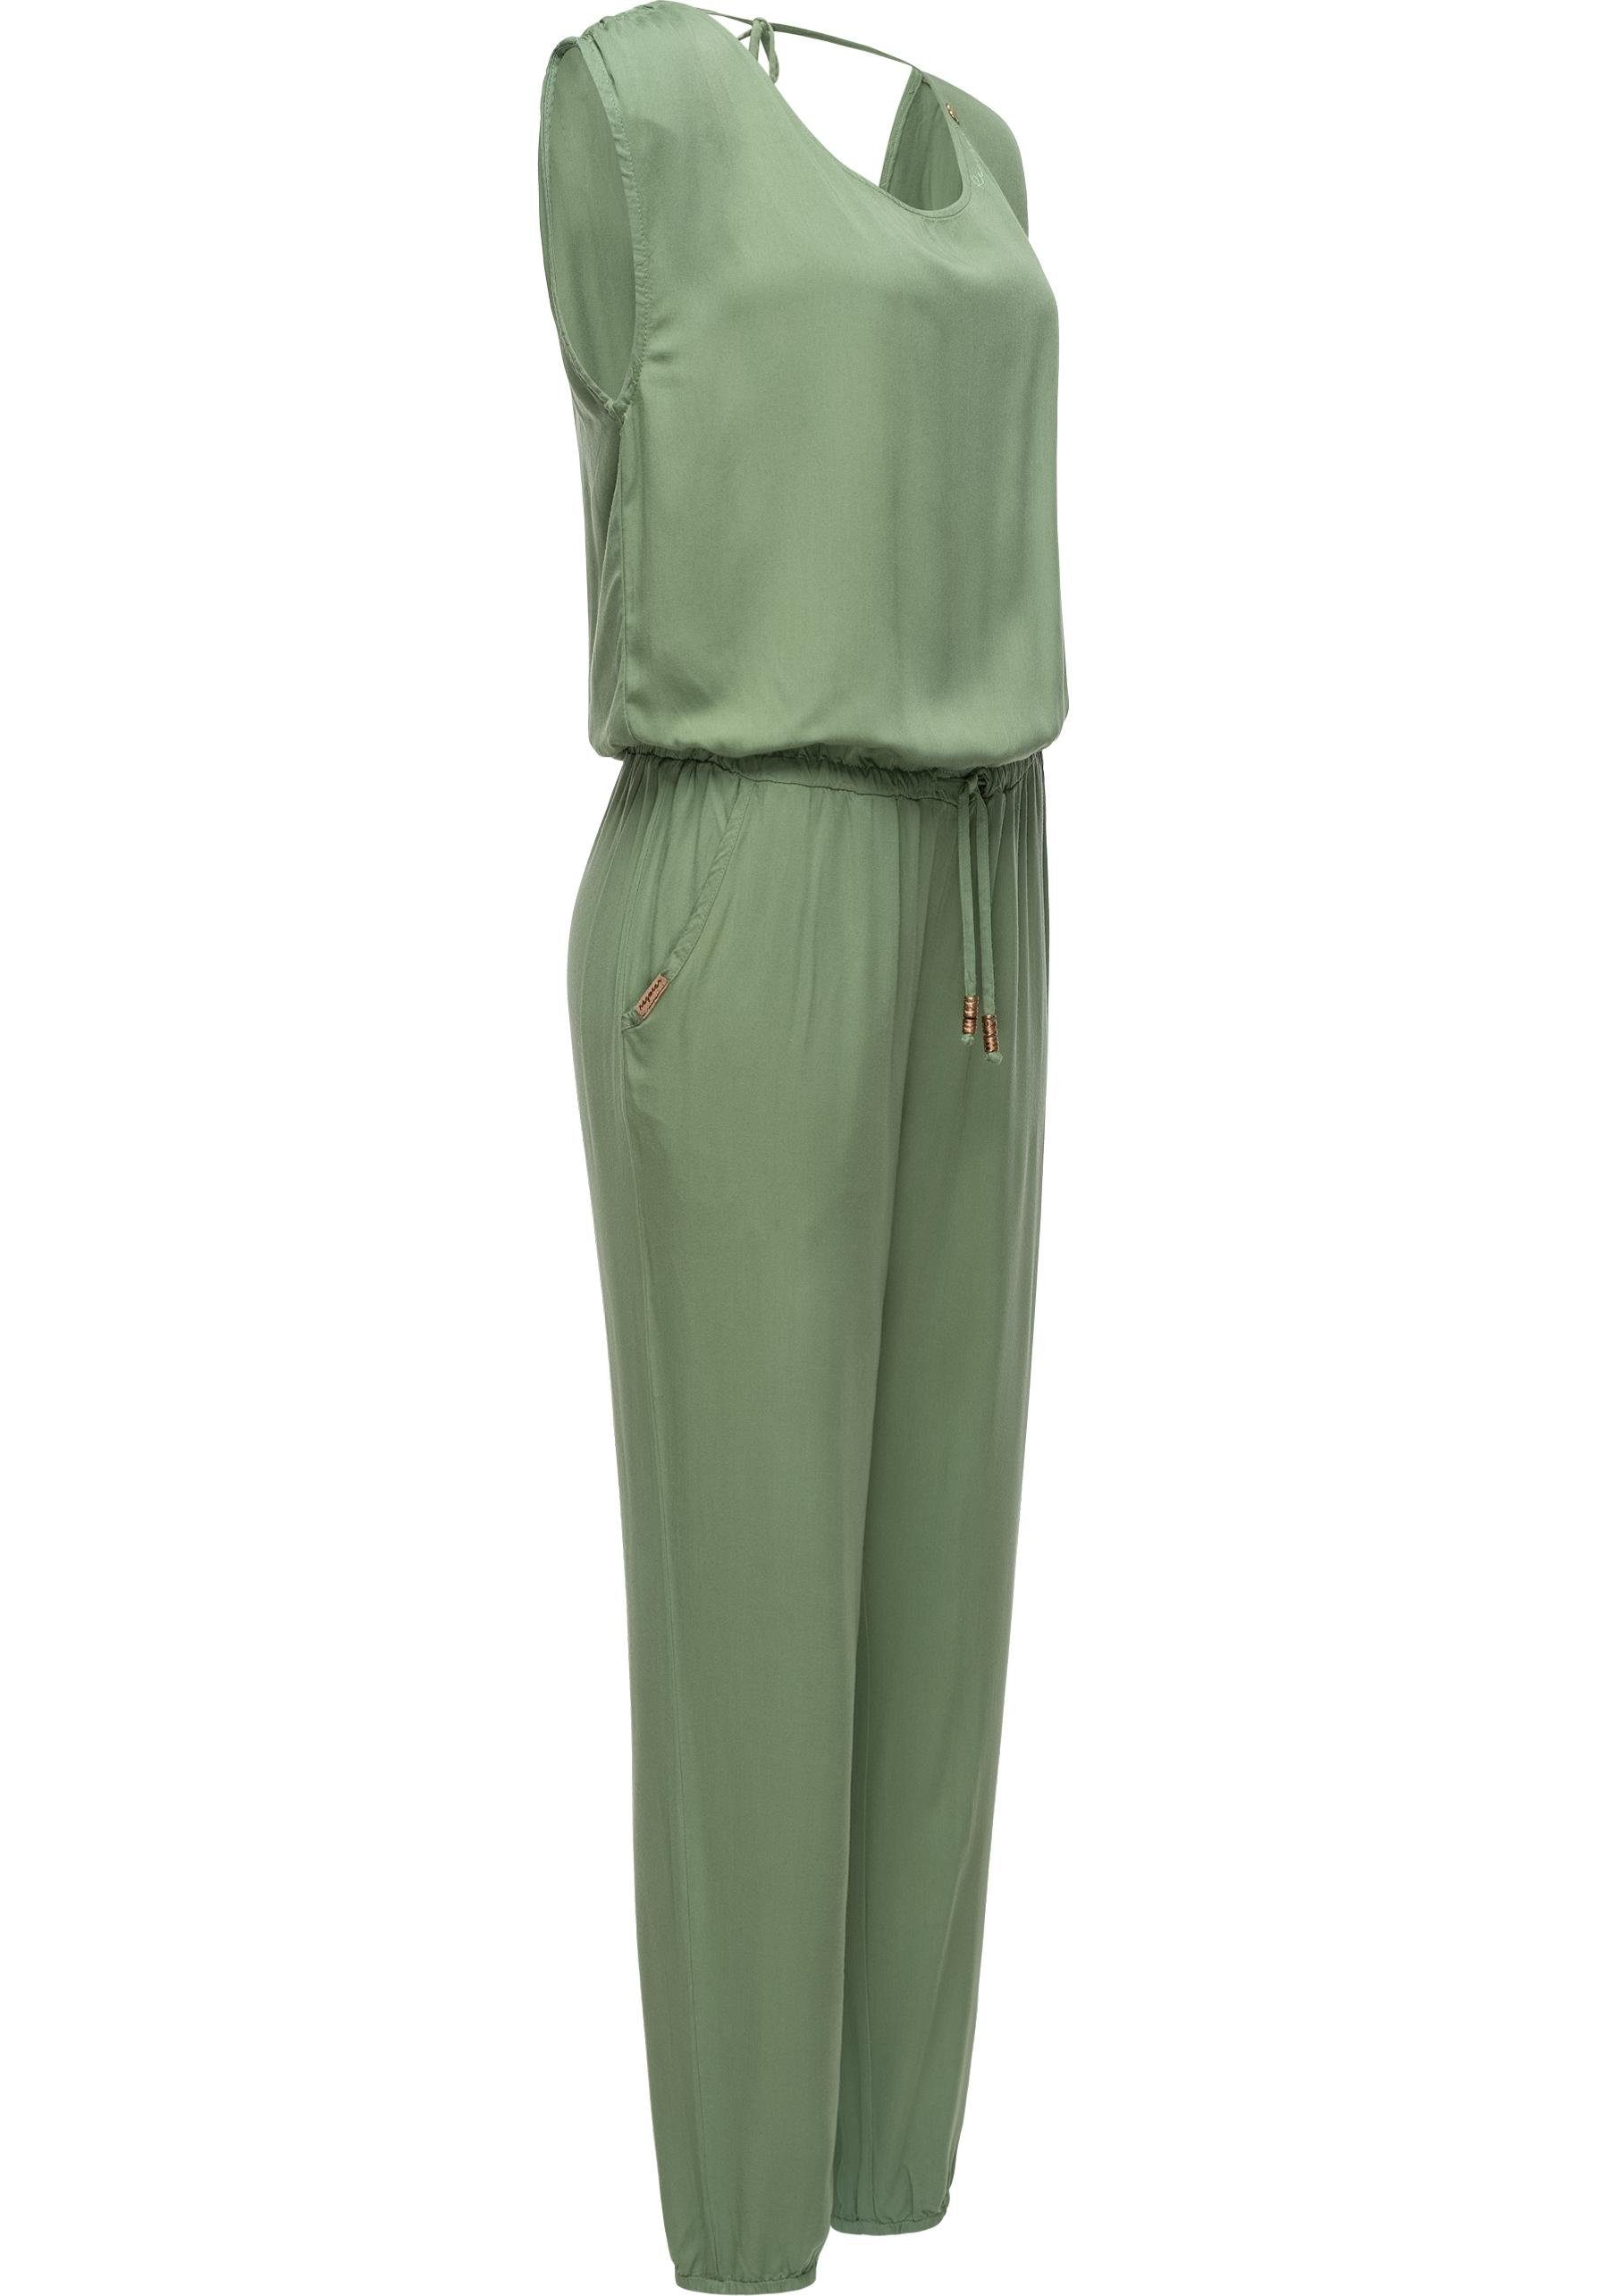 mit langer Noveel schicker, Damen Overall graugrün Ragwear Jumpsuit Bindeband